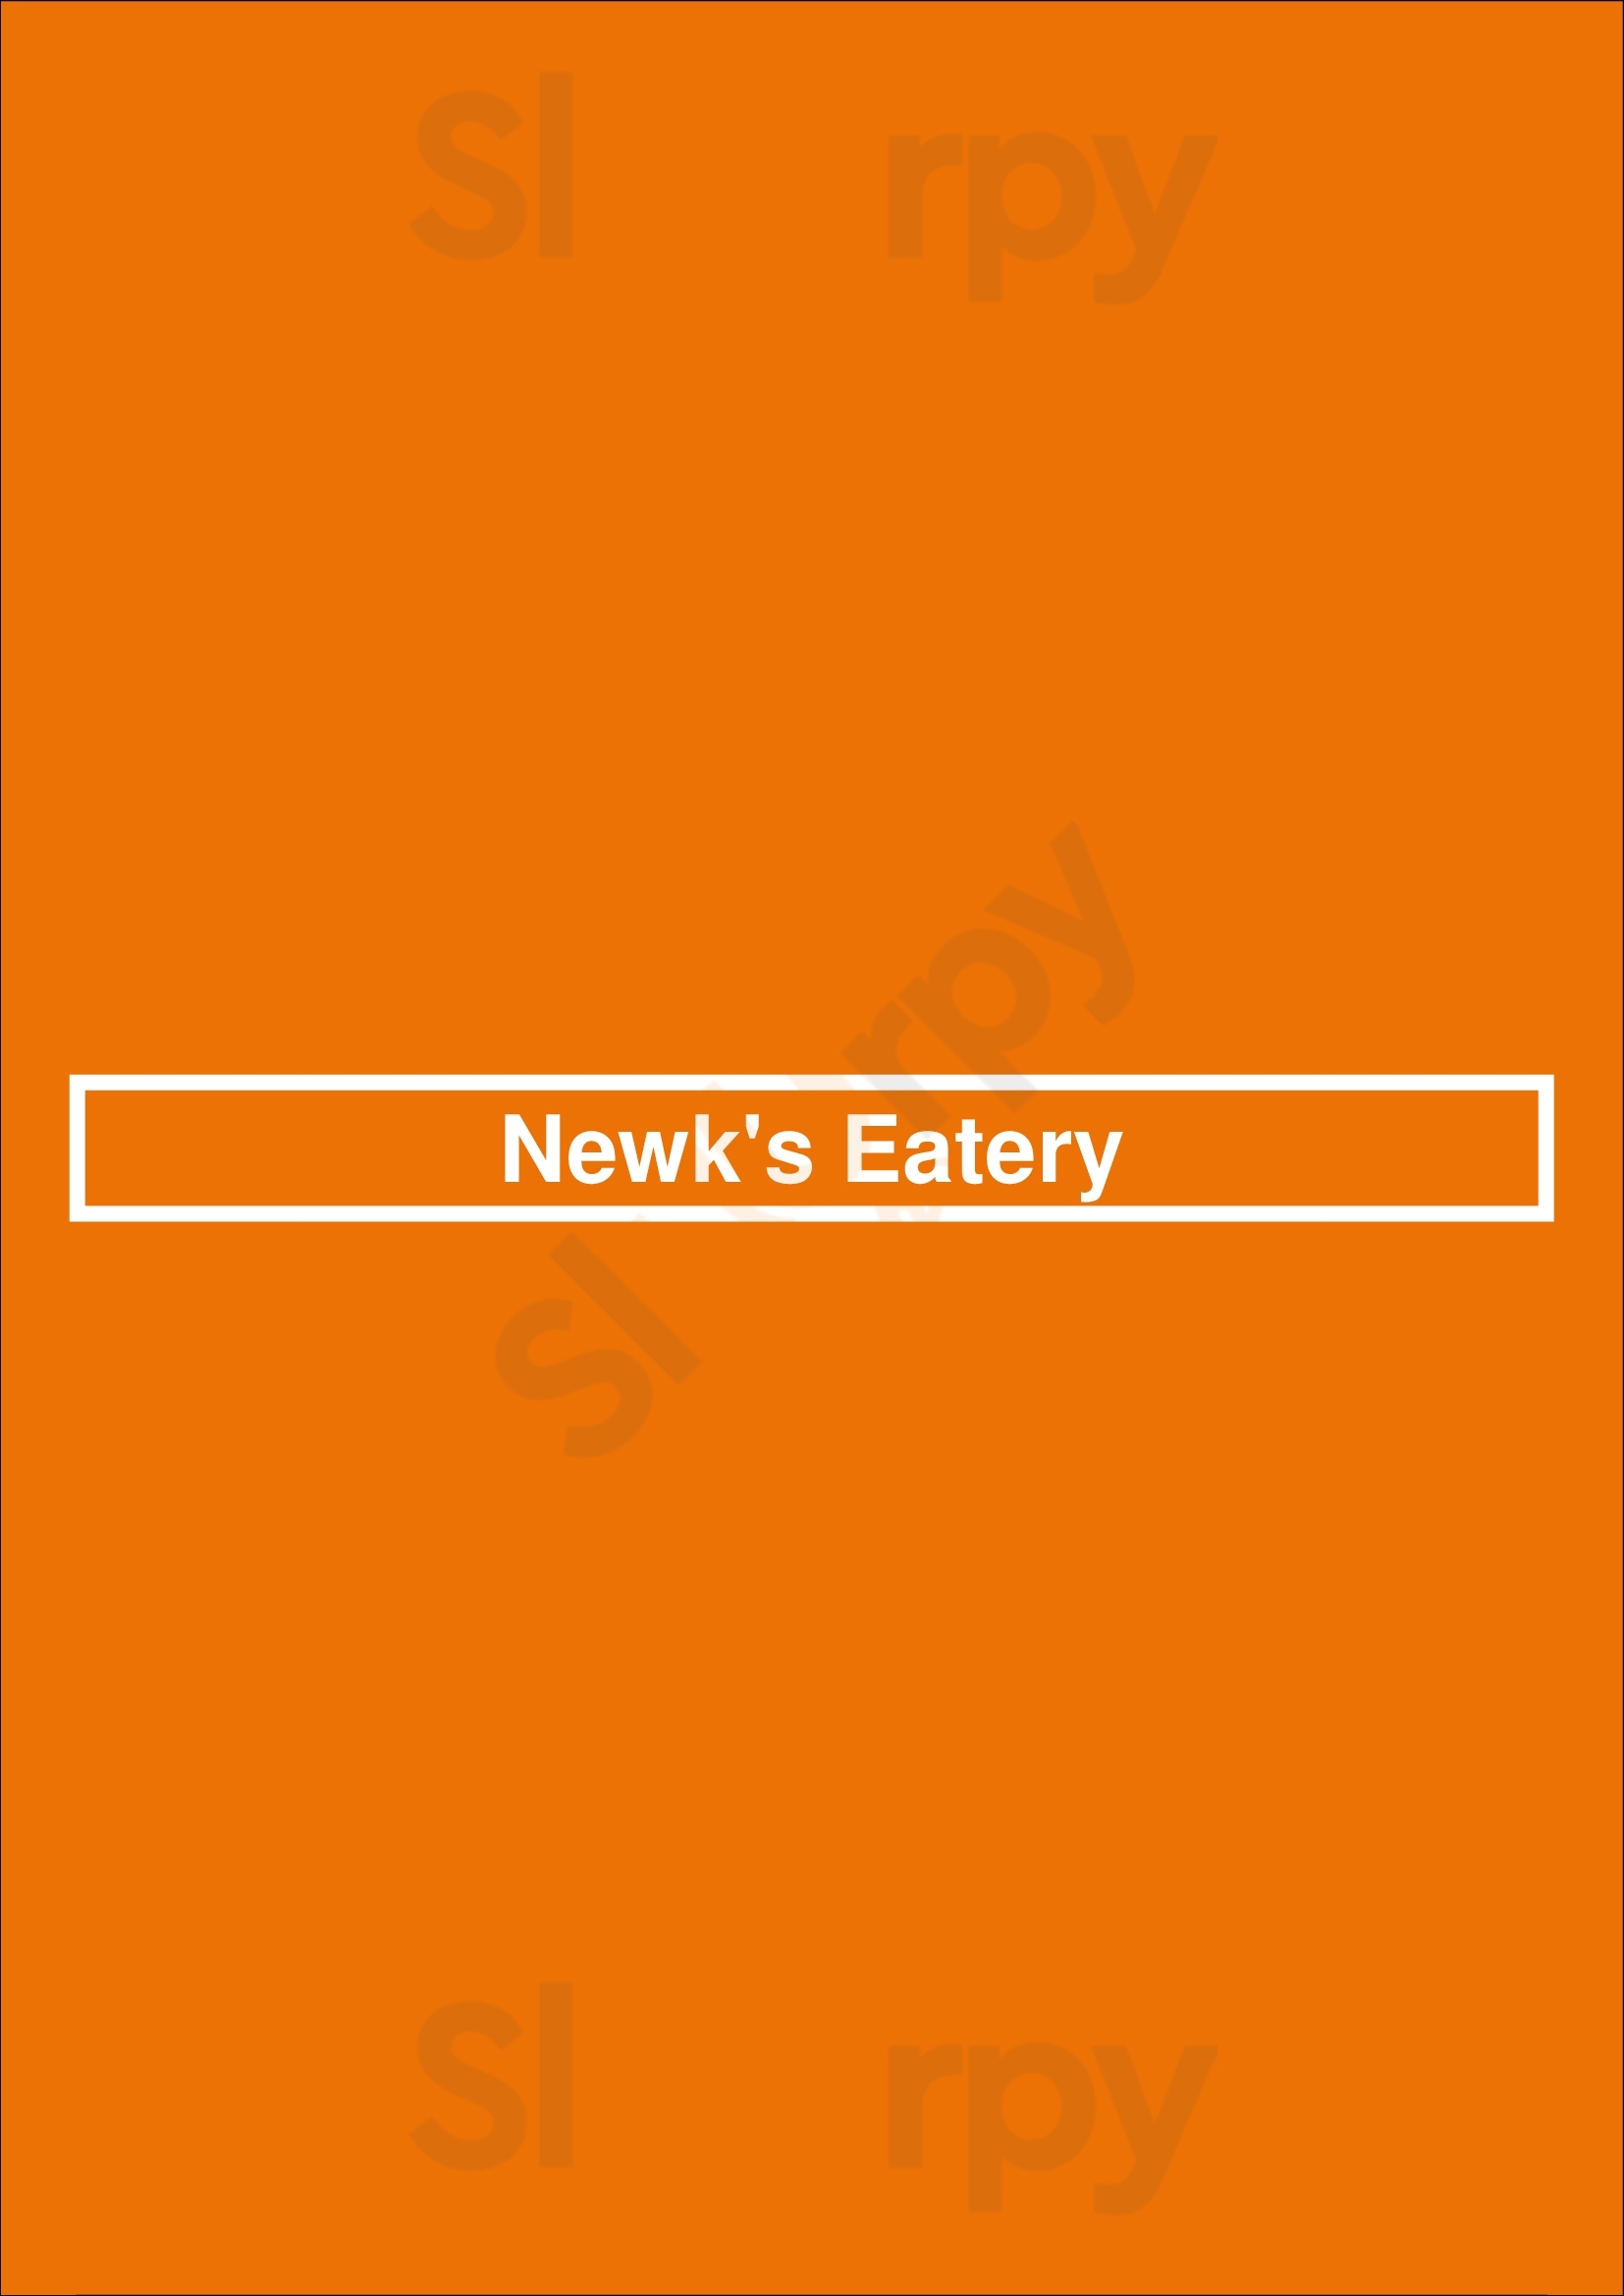 Newk's Eatery Albany Menu - 1